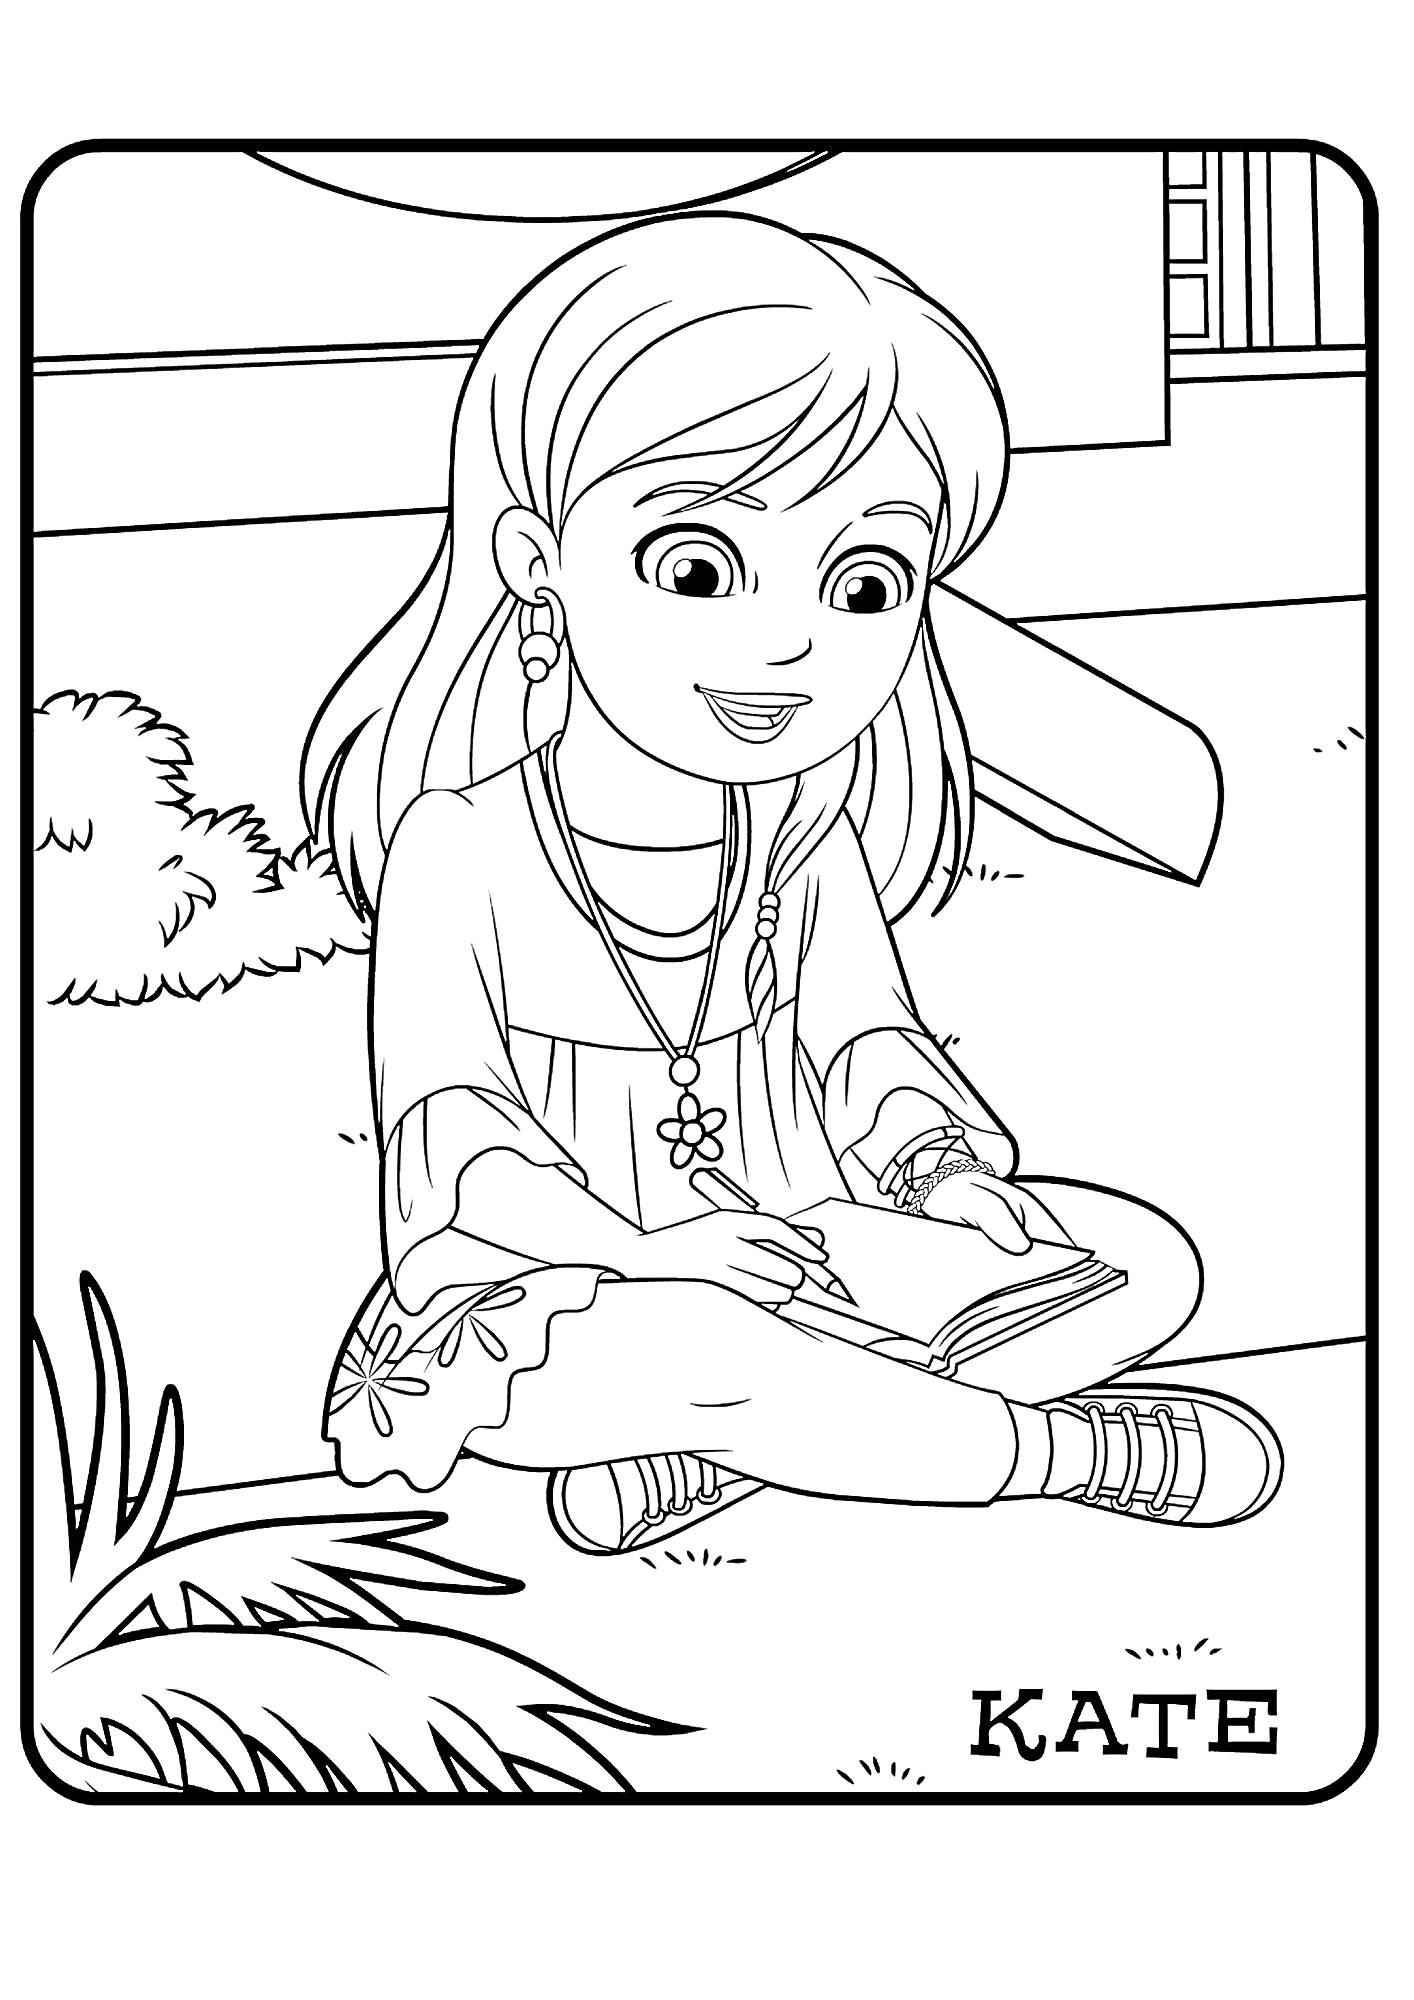 Девочка с серёжками и браслетами, сидящая на траве, рисует в блокноте.